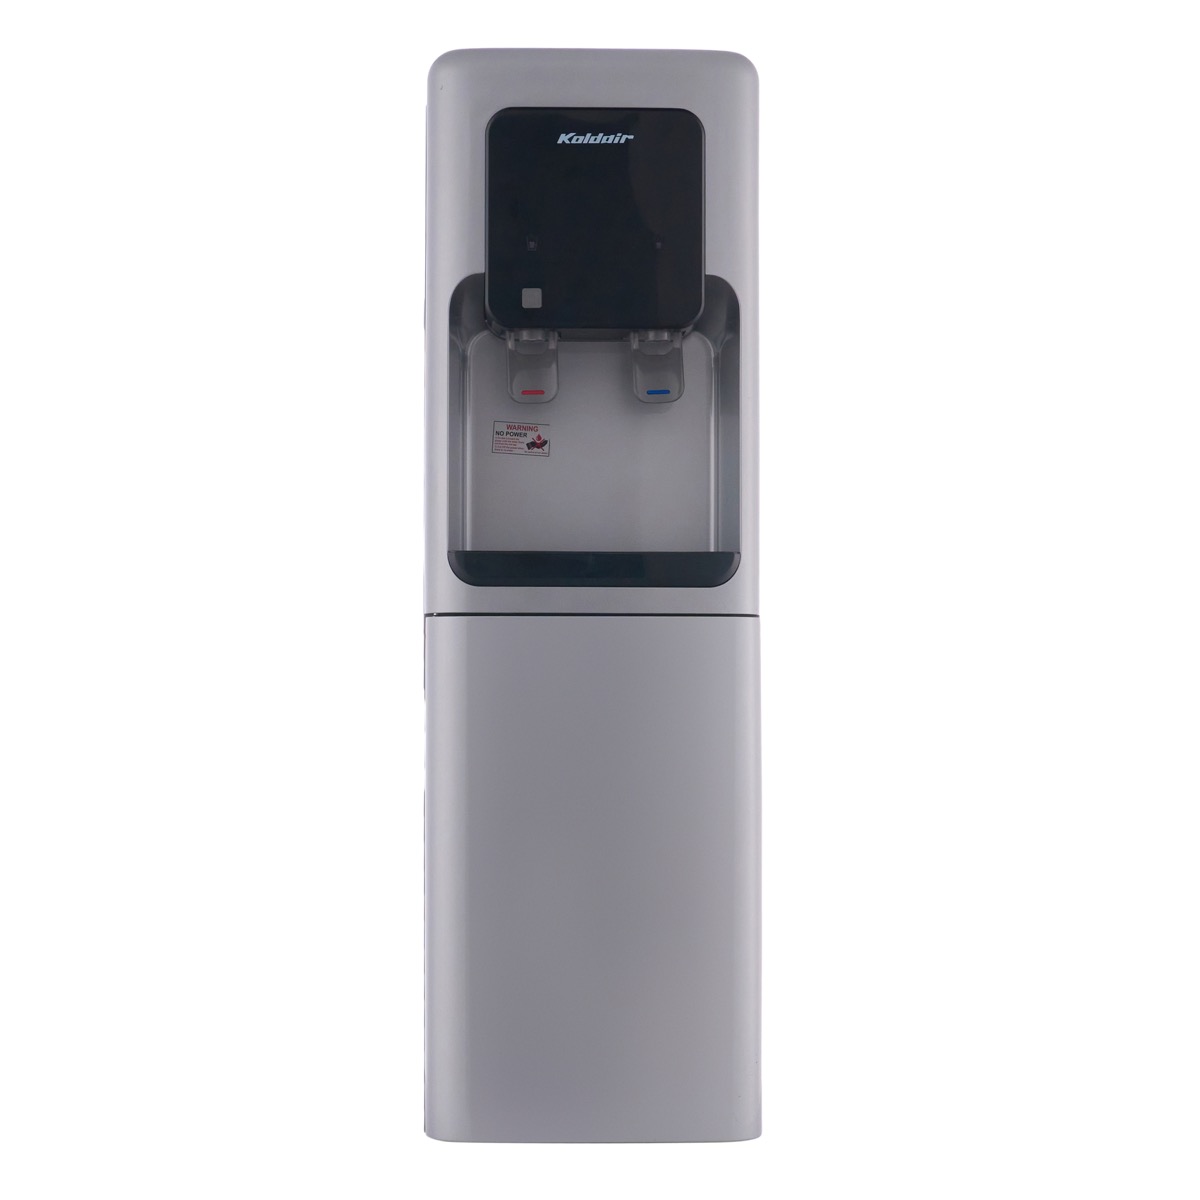 Koldair Hot & Cold Water Dispenser with Fridge, Silver - KWD BF 2.1